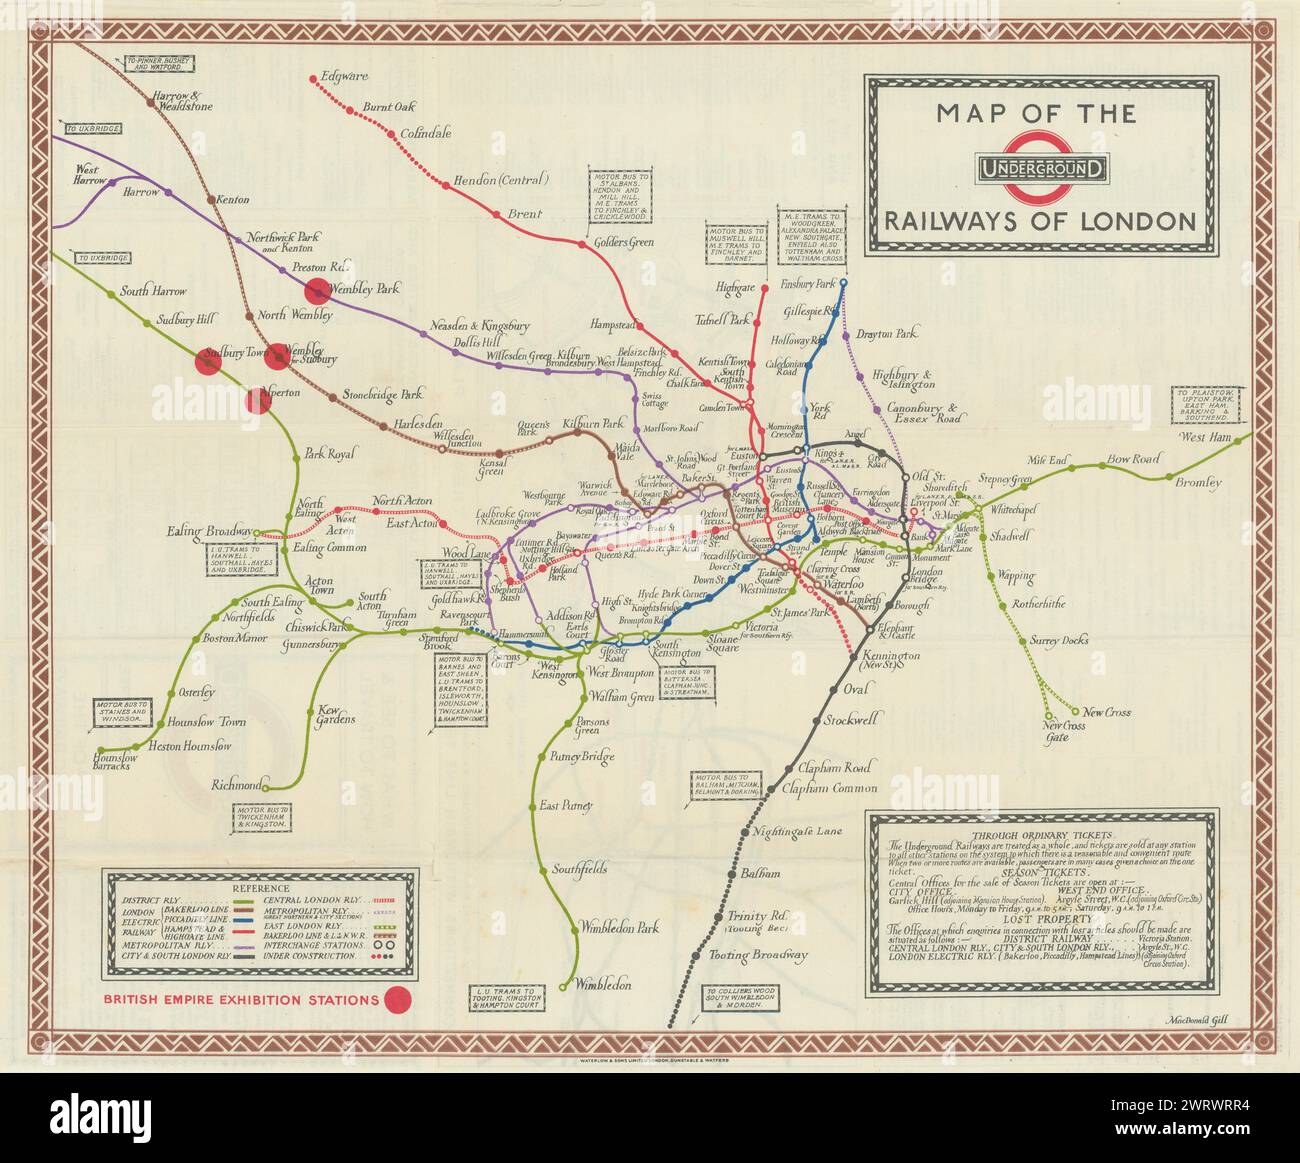 Map of the Underground Railways of London by Macdonald Gill. November 1923 Stock Photo